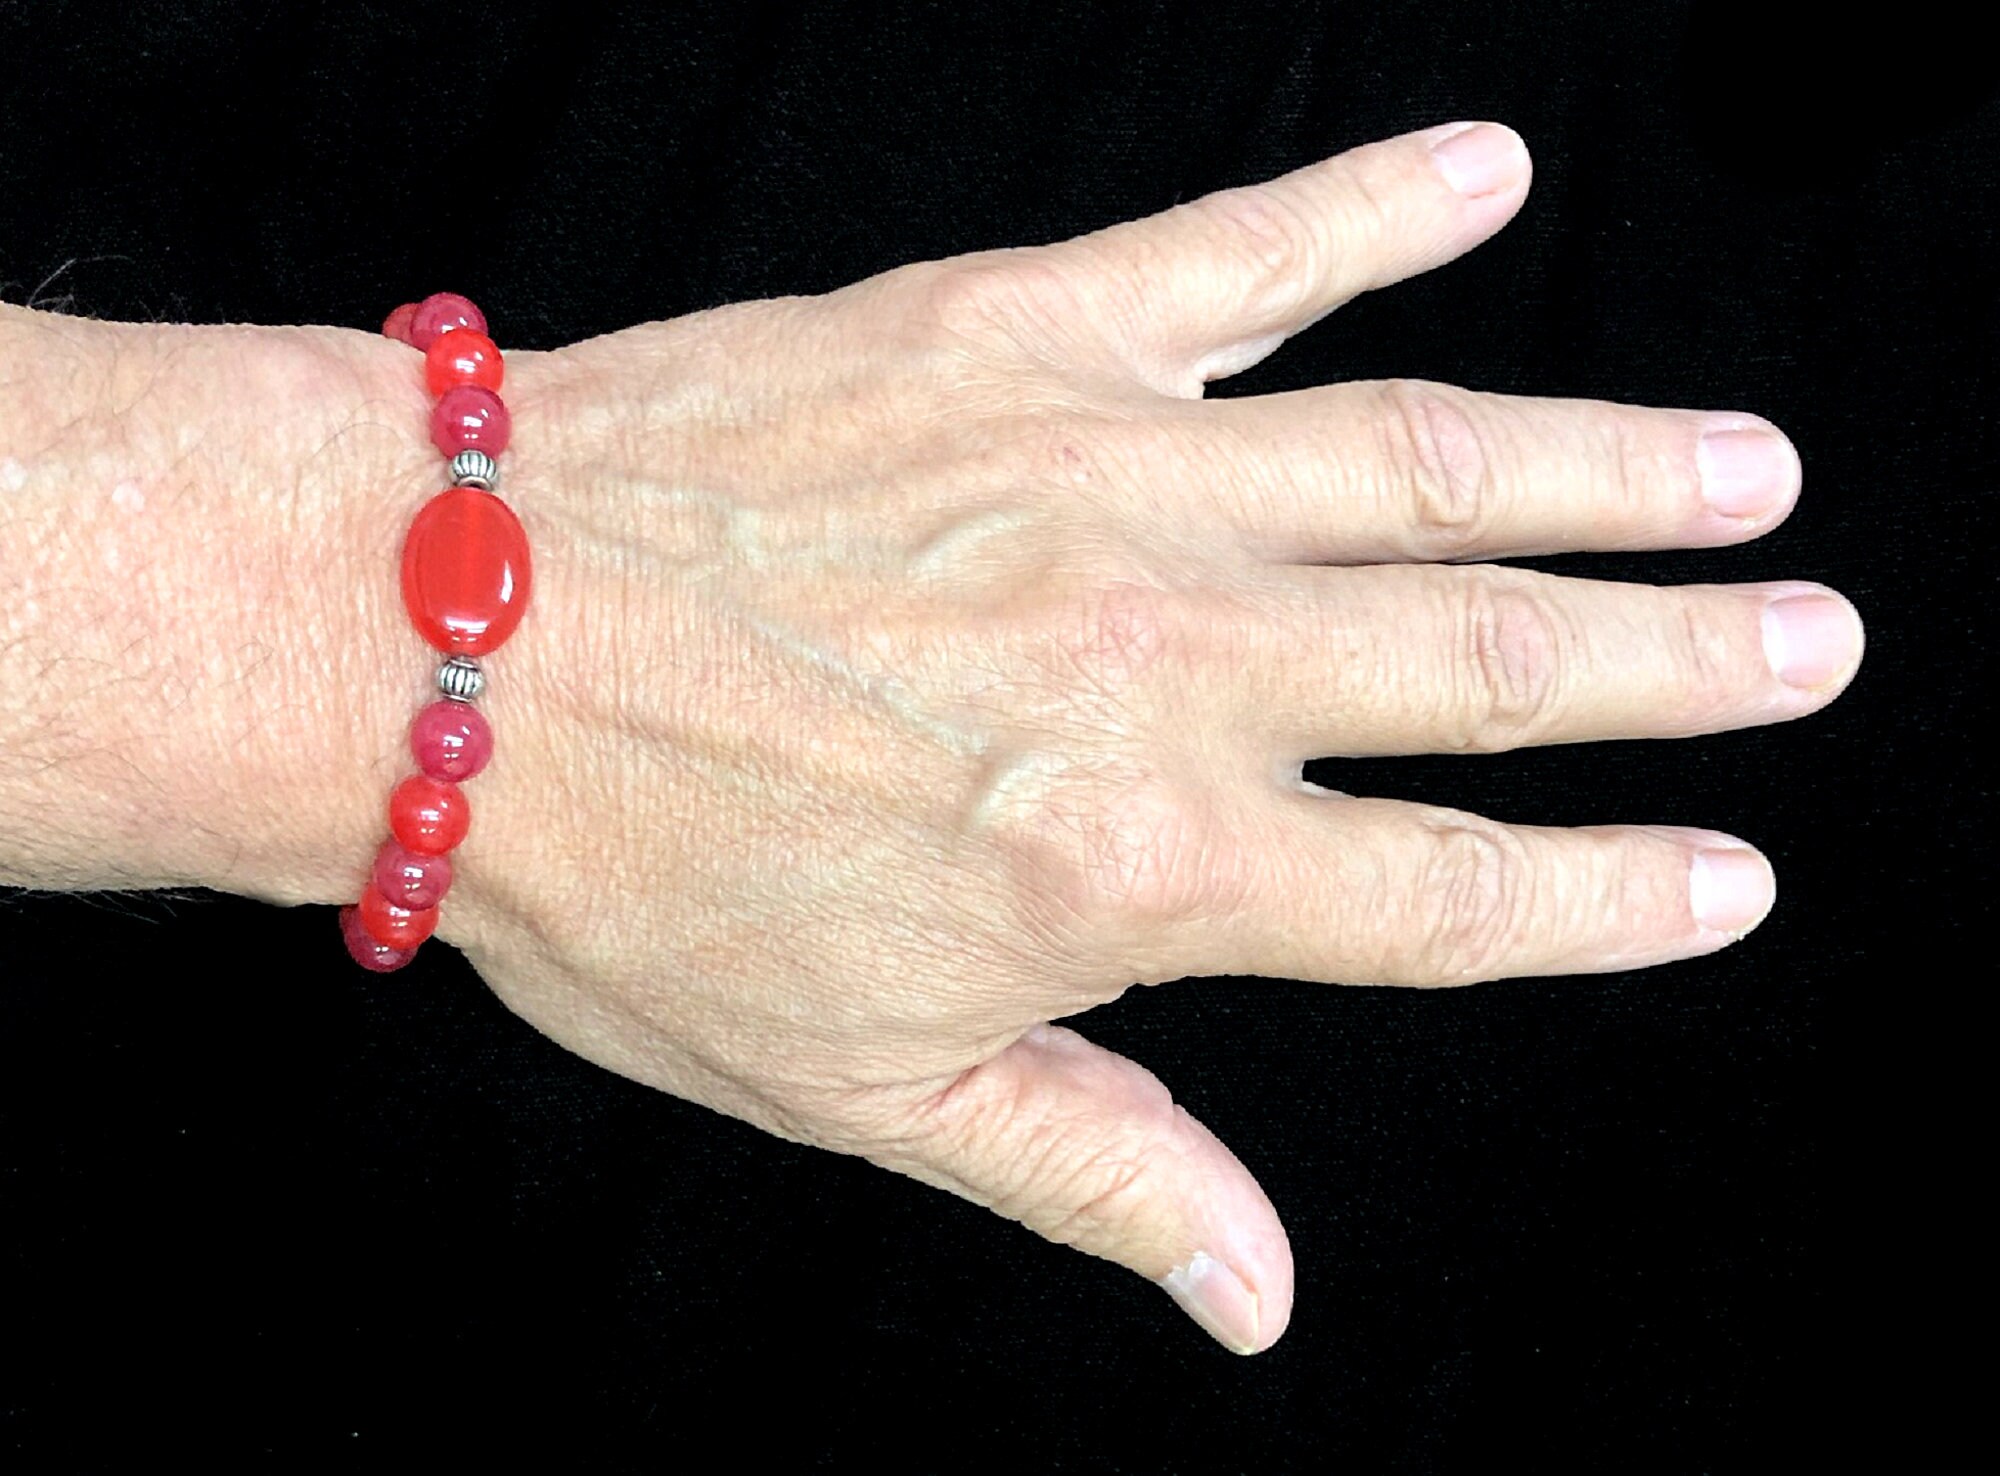 8mm Red Jade Gemstones Stretch Tibetan Bracelet Healing Chakra Protection Meditation Yoga Mala Zodiac Aries Taurus Gemini Libra Bracelet